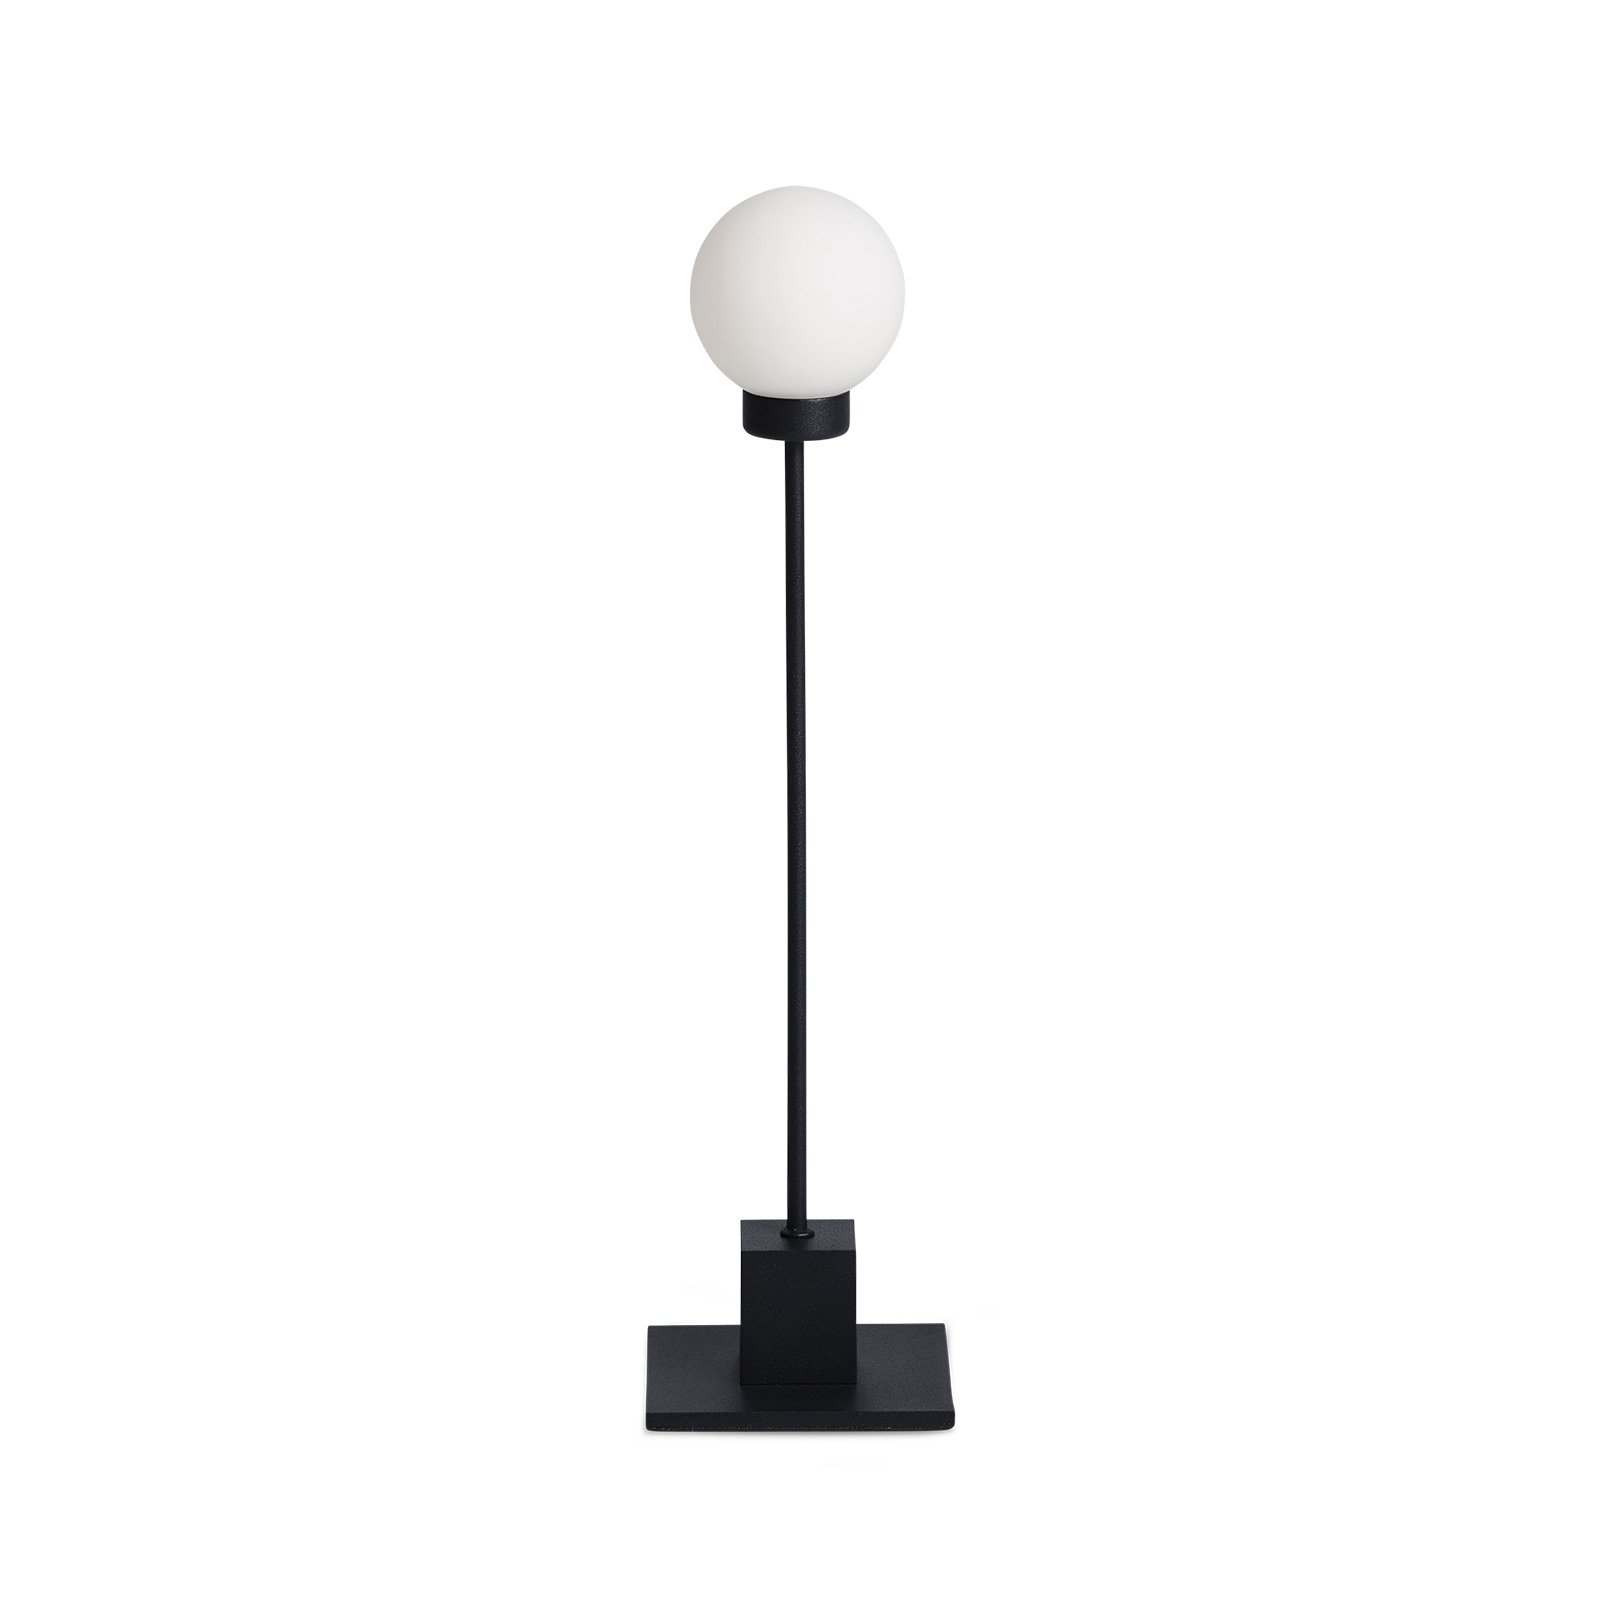 Northern tafellamp Snowball, zwart